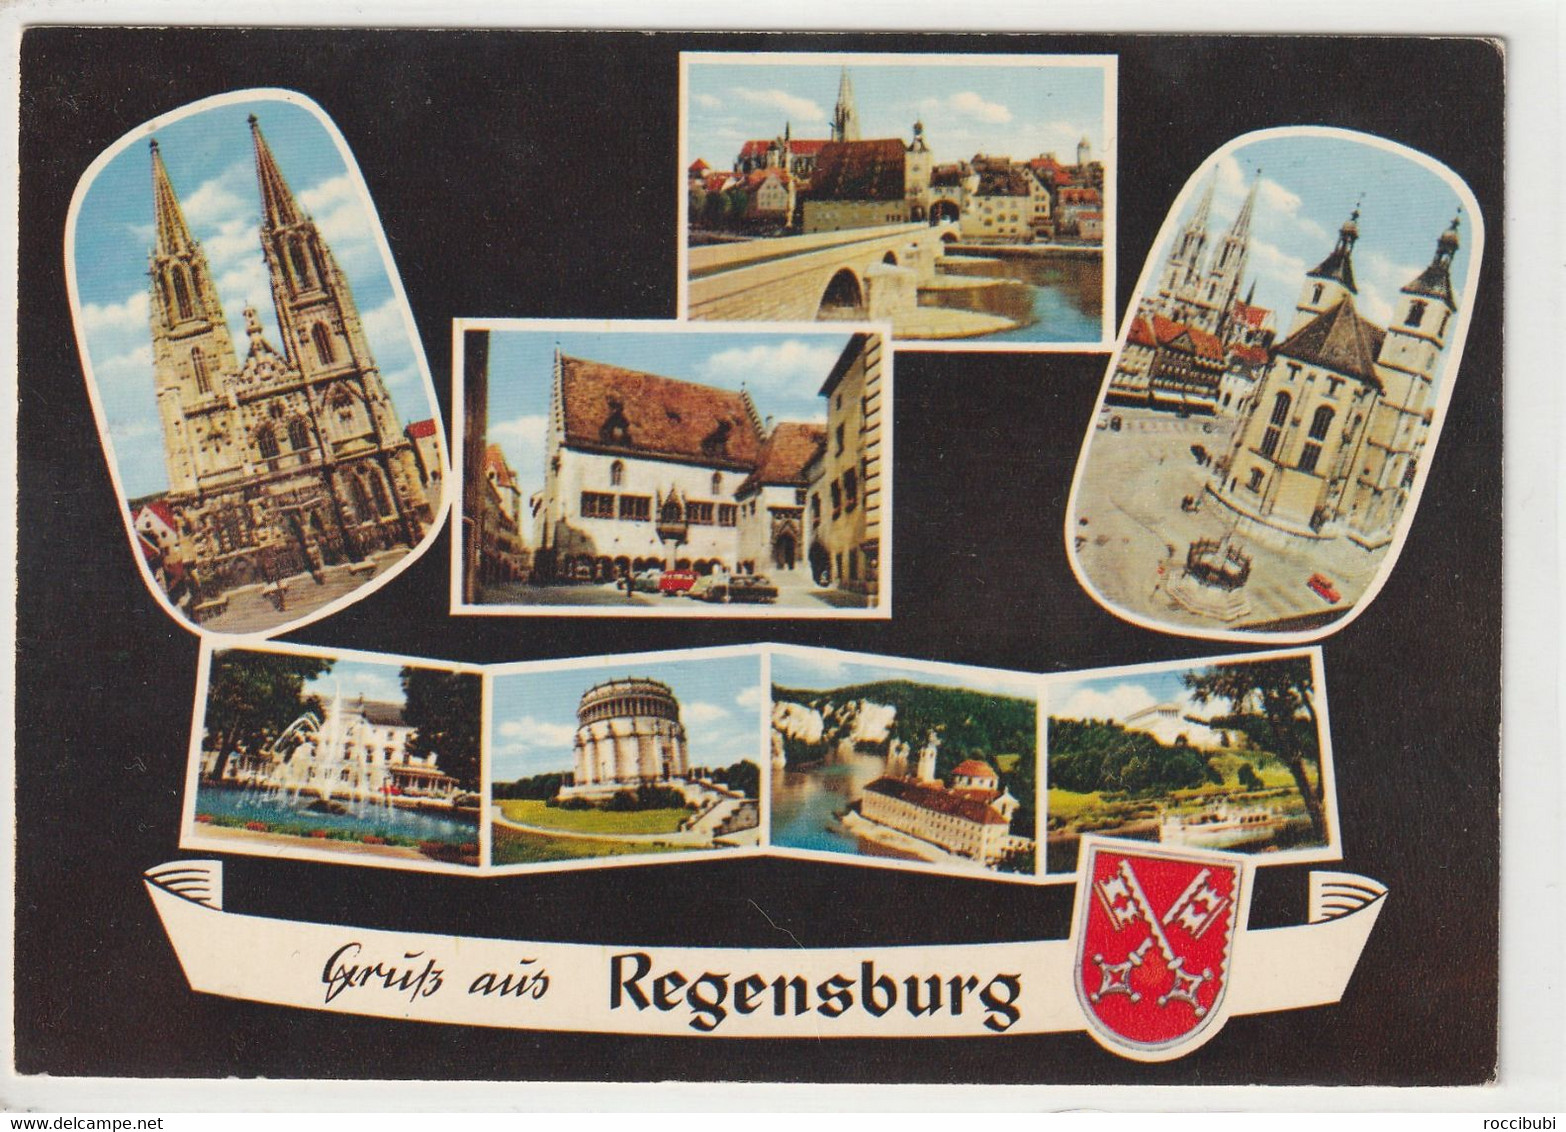 Regensburg, Bayern - Regensburg